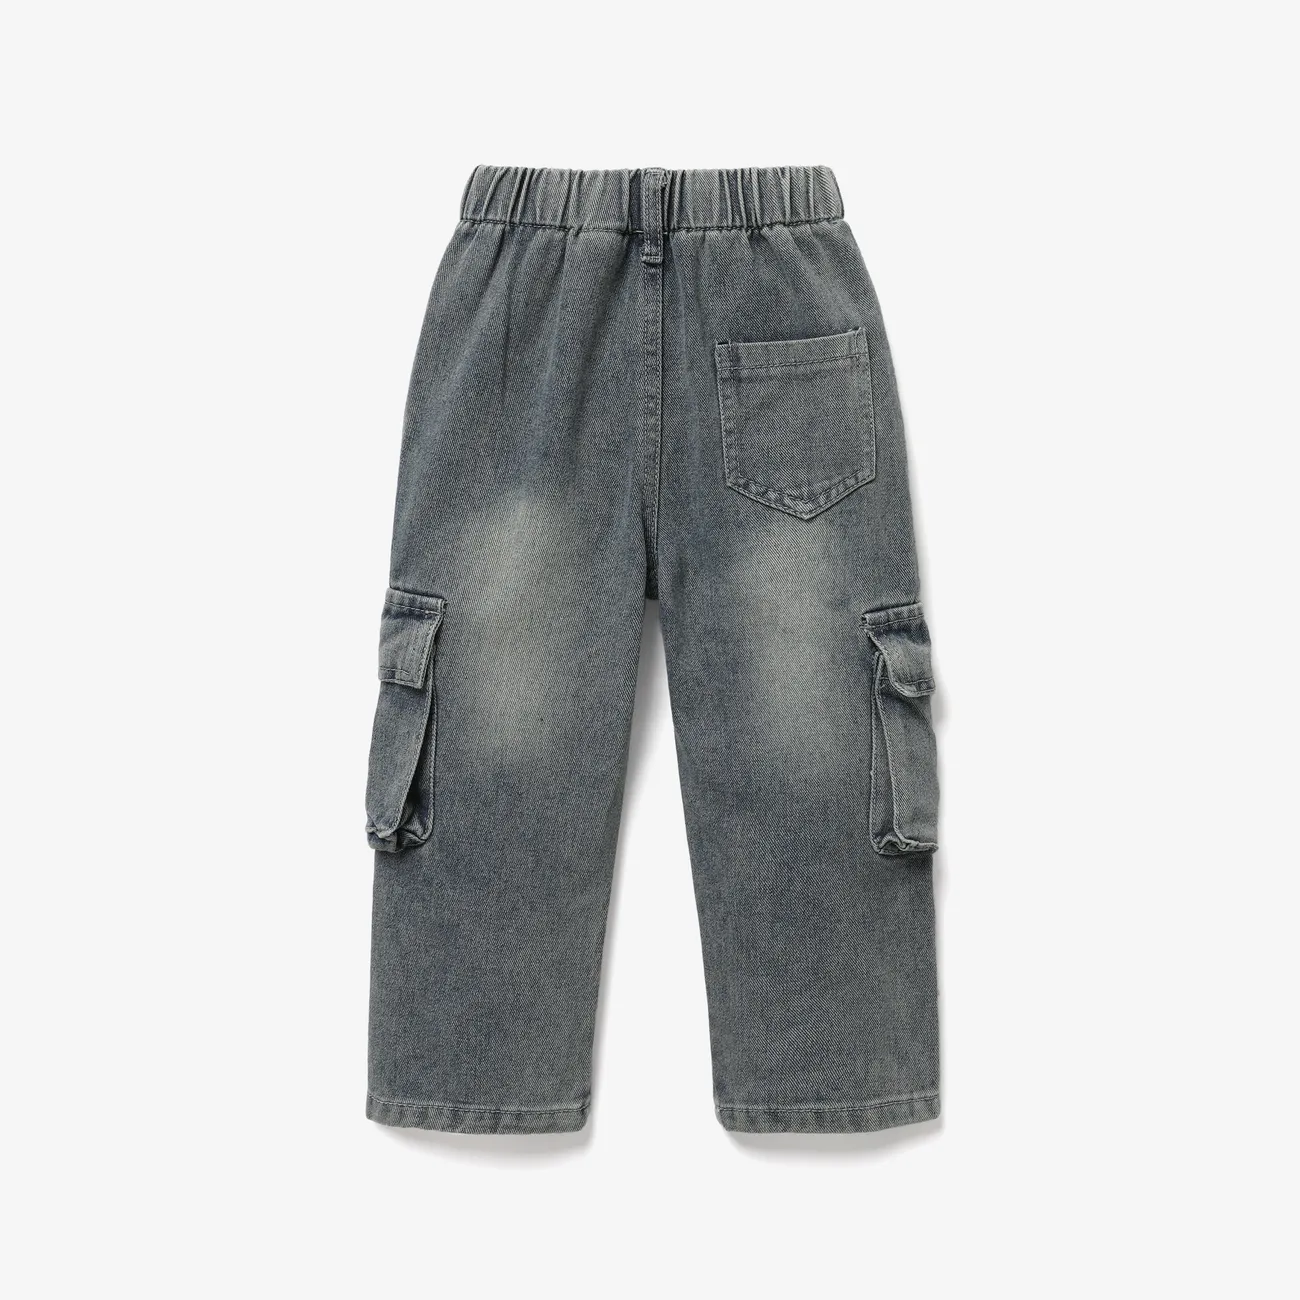 Kleinkind / Kind Mädchen / Junge Vintage Arbeitskleidung Denim Patch Pocket Jeans schlammgelb big image 1